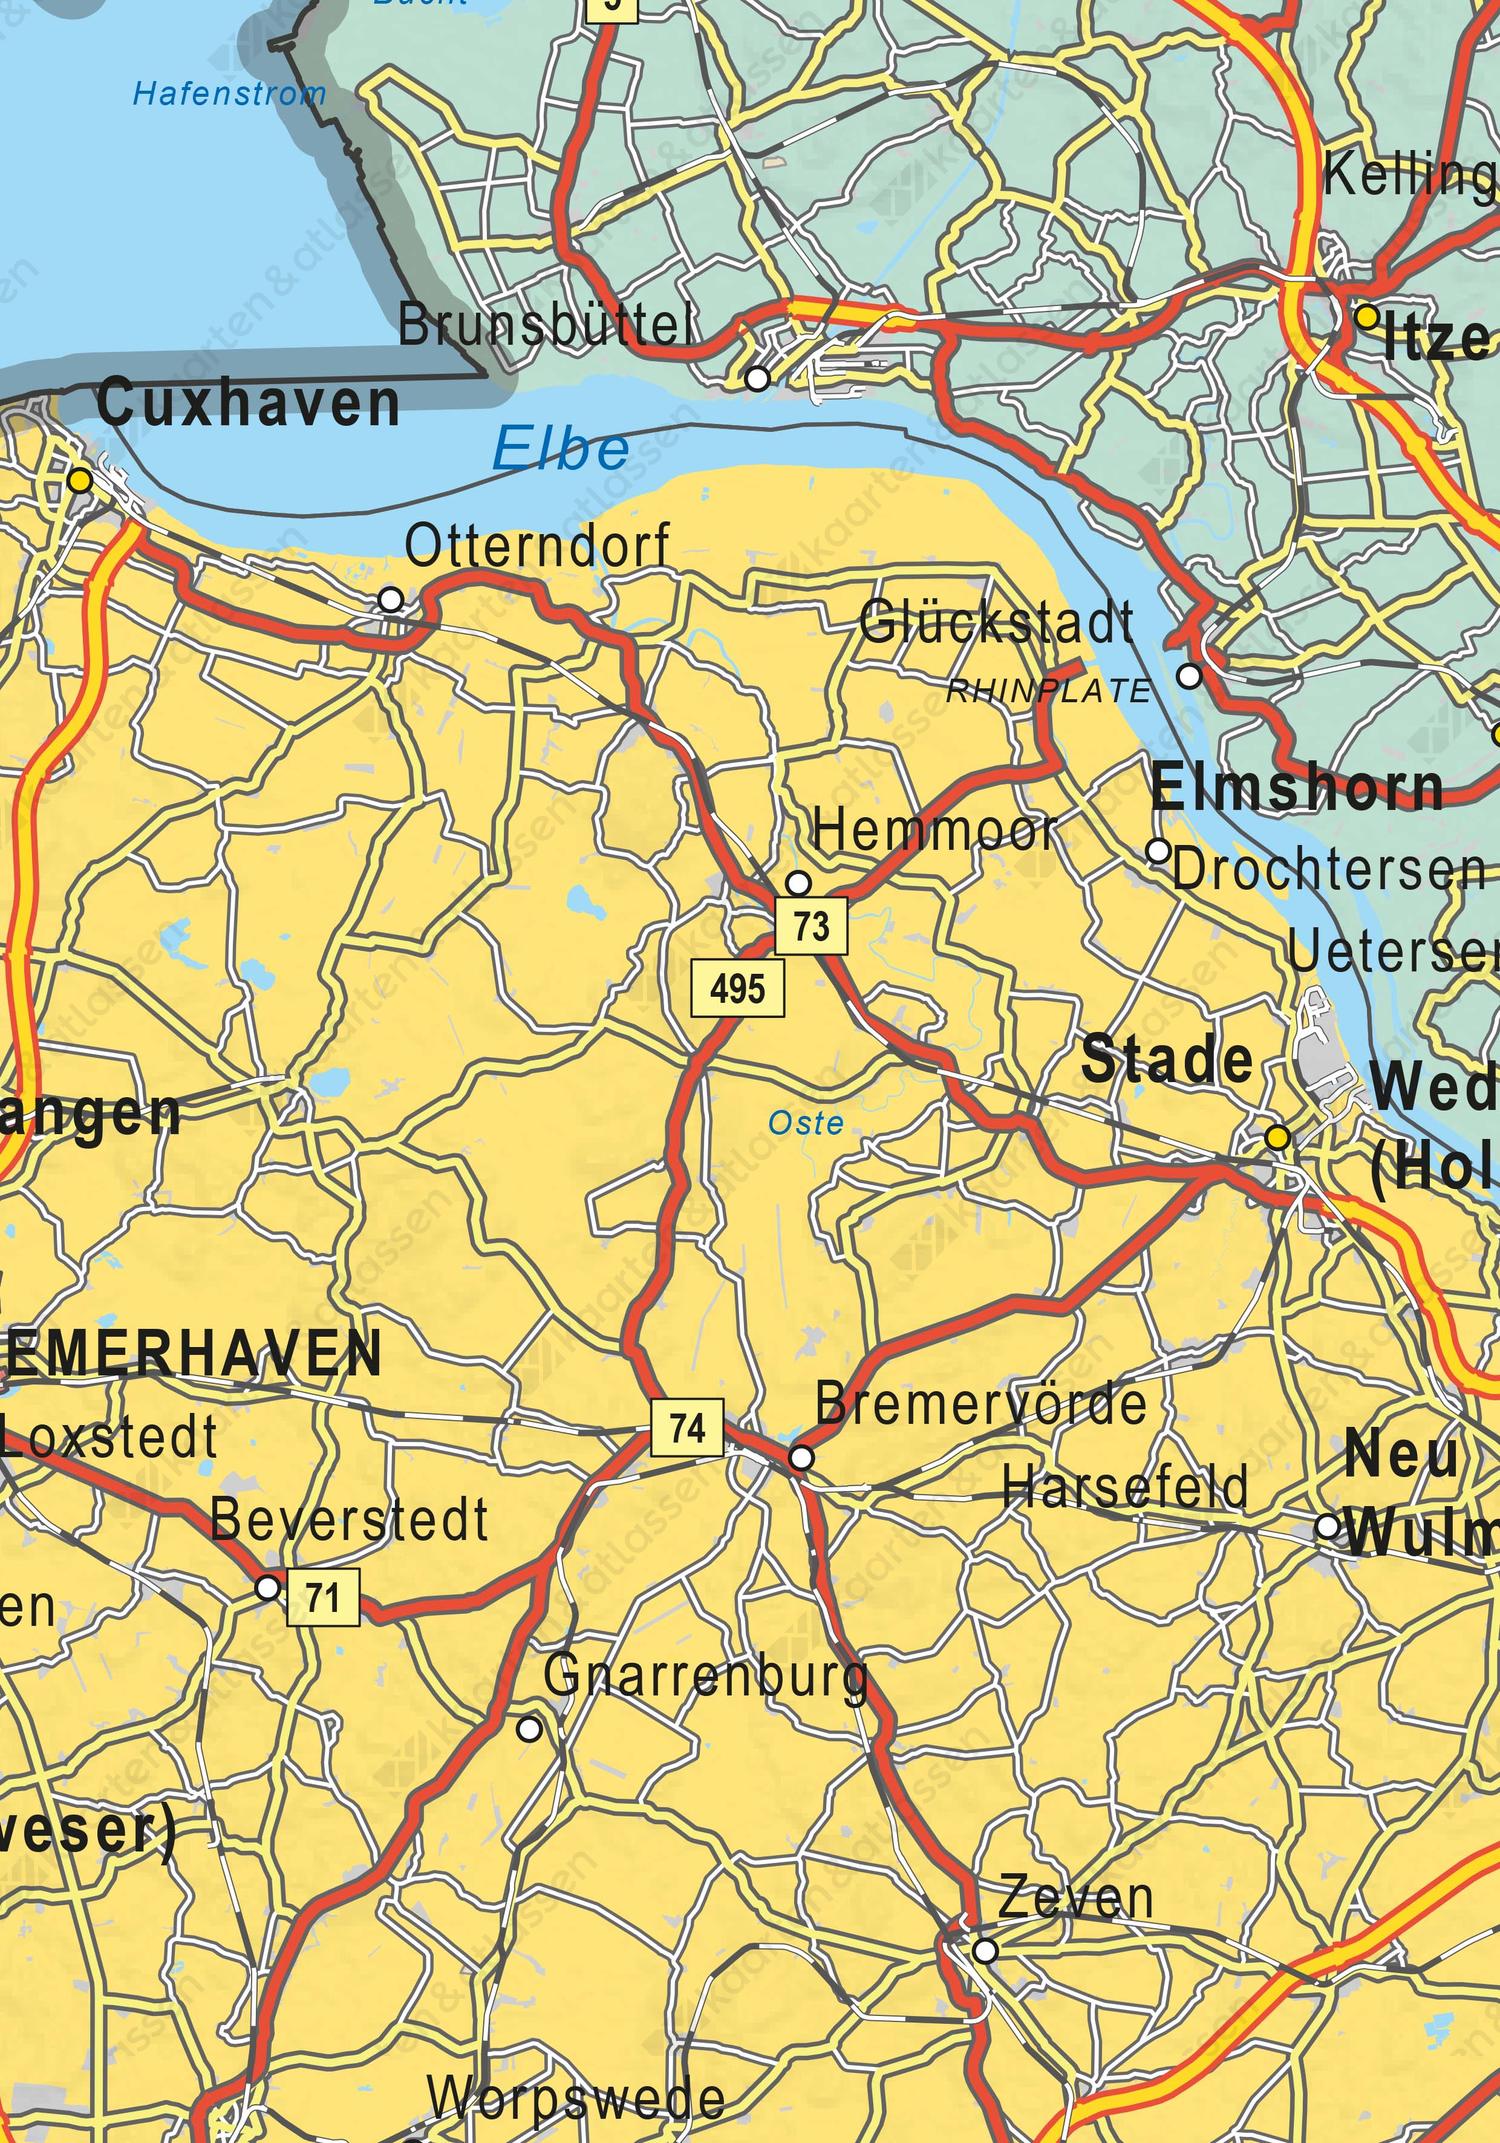 Whiteboard Noord-Duitsland 1564 | Kaarten en